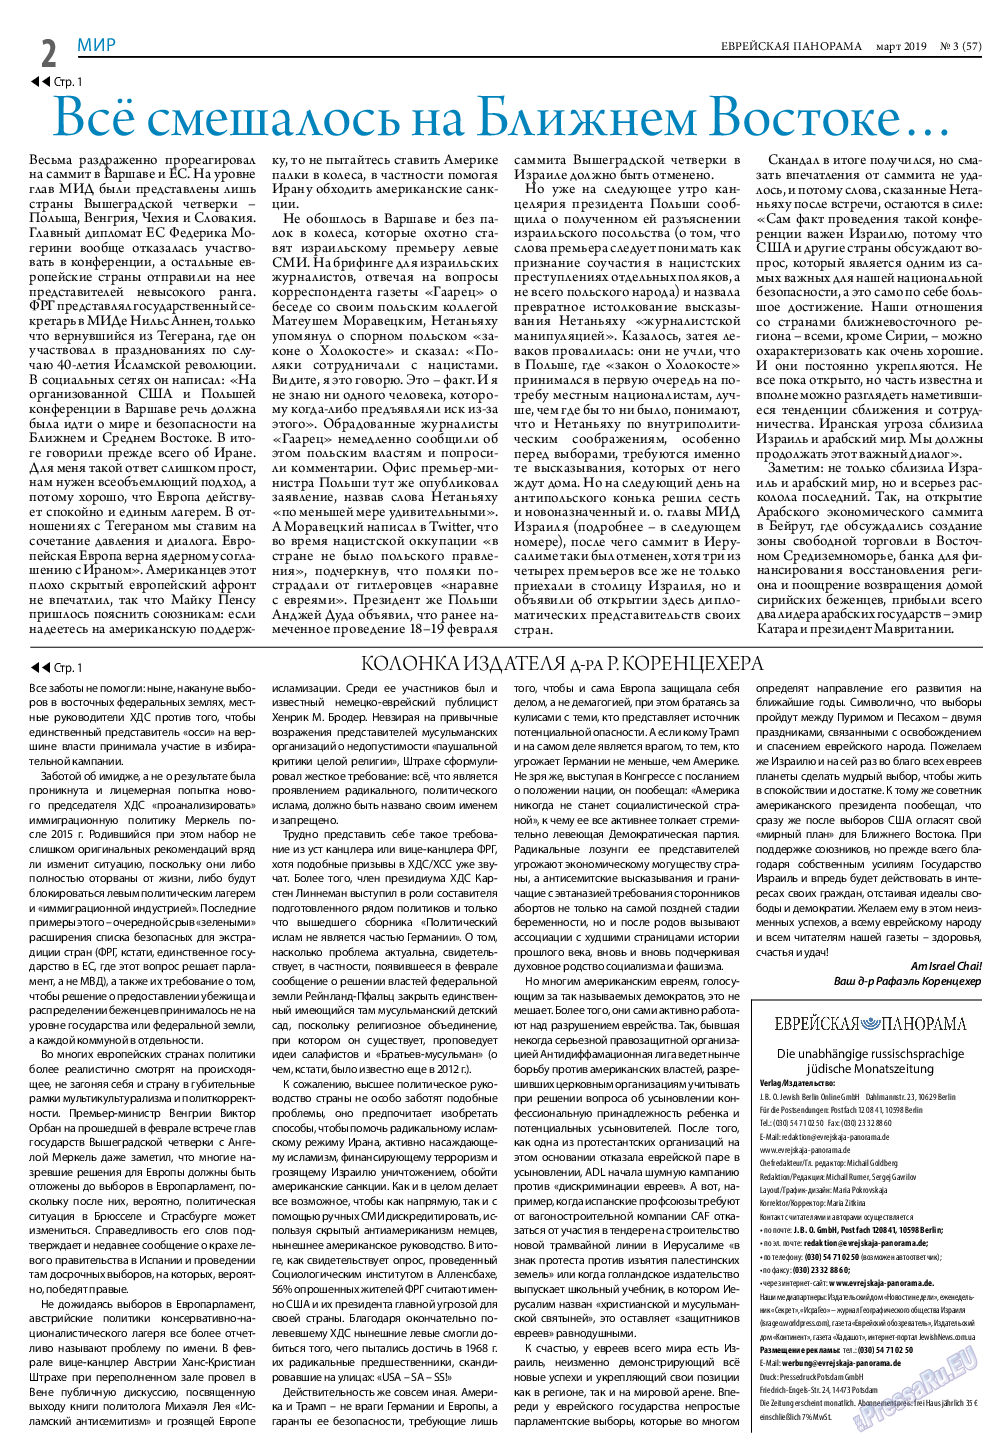 Еврейская панорама, газета. 2019 №3 стр.2